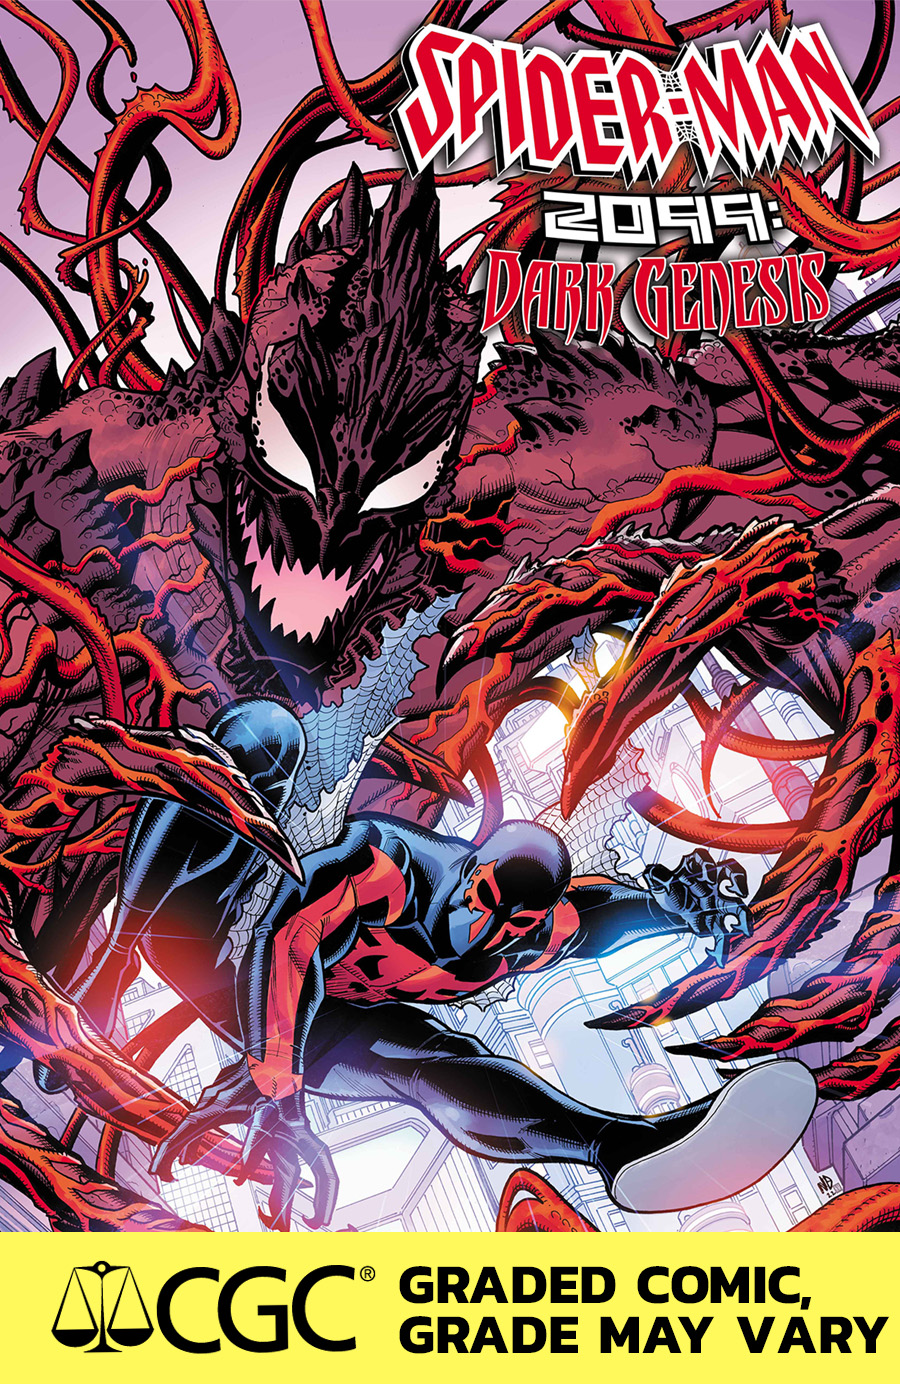 Spider-Man 2099 Dark Genesis #1 Cover F DF CGC Graded